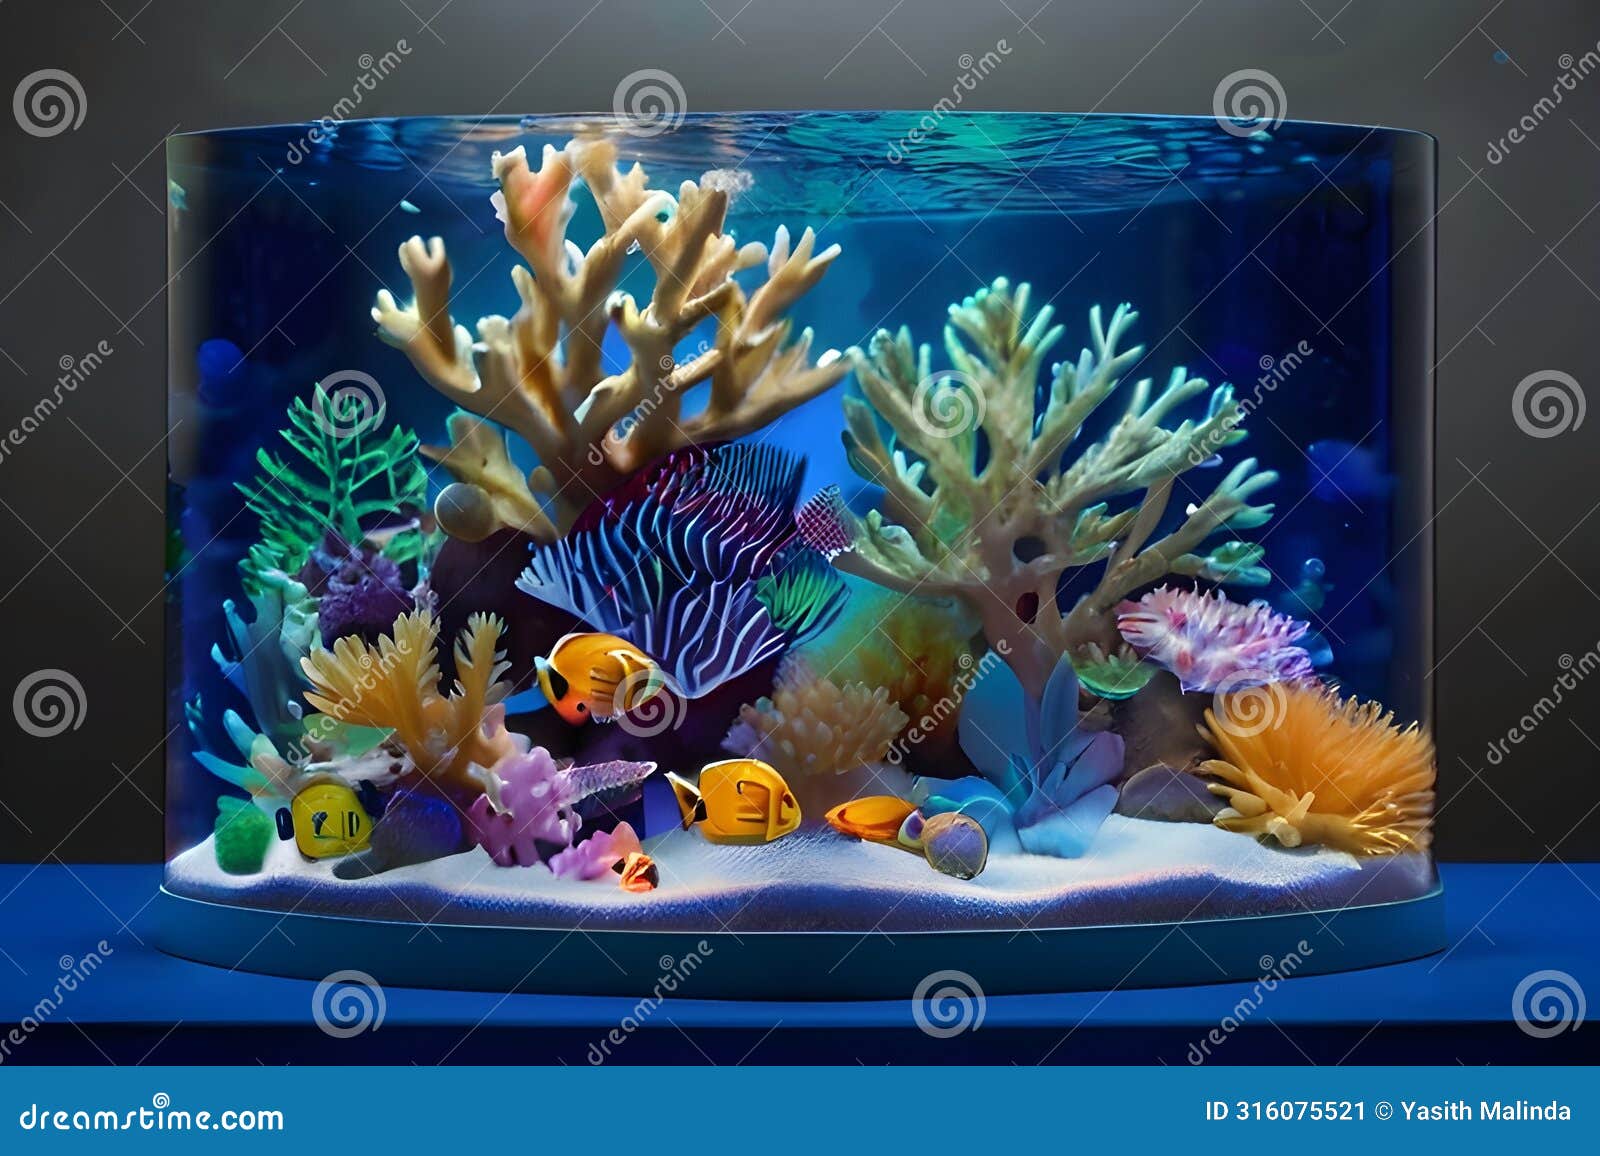 a serene underwater tableau